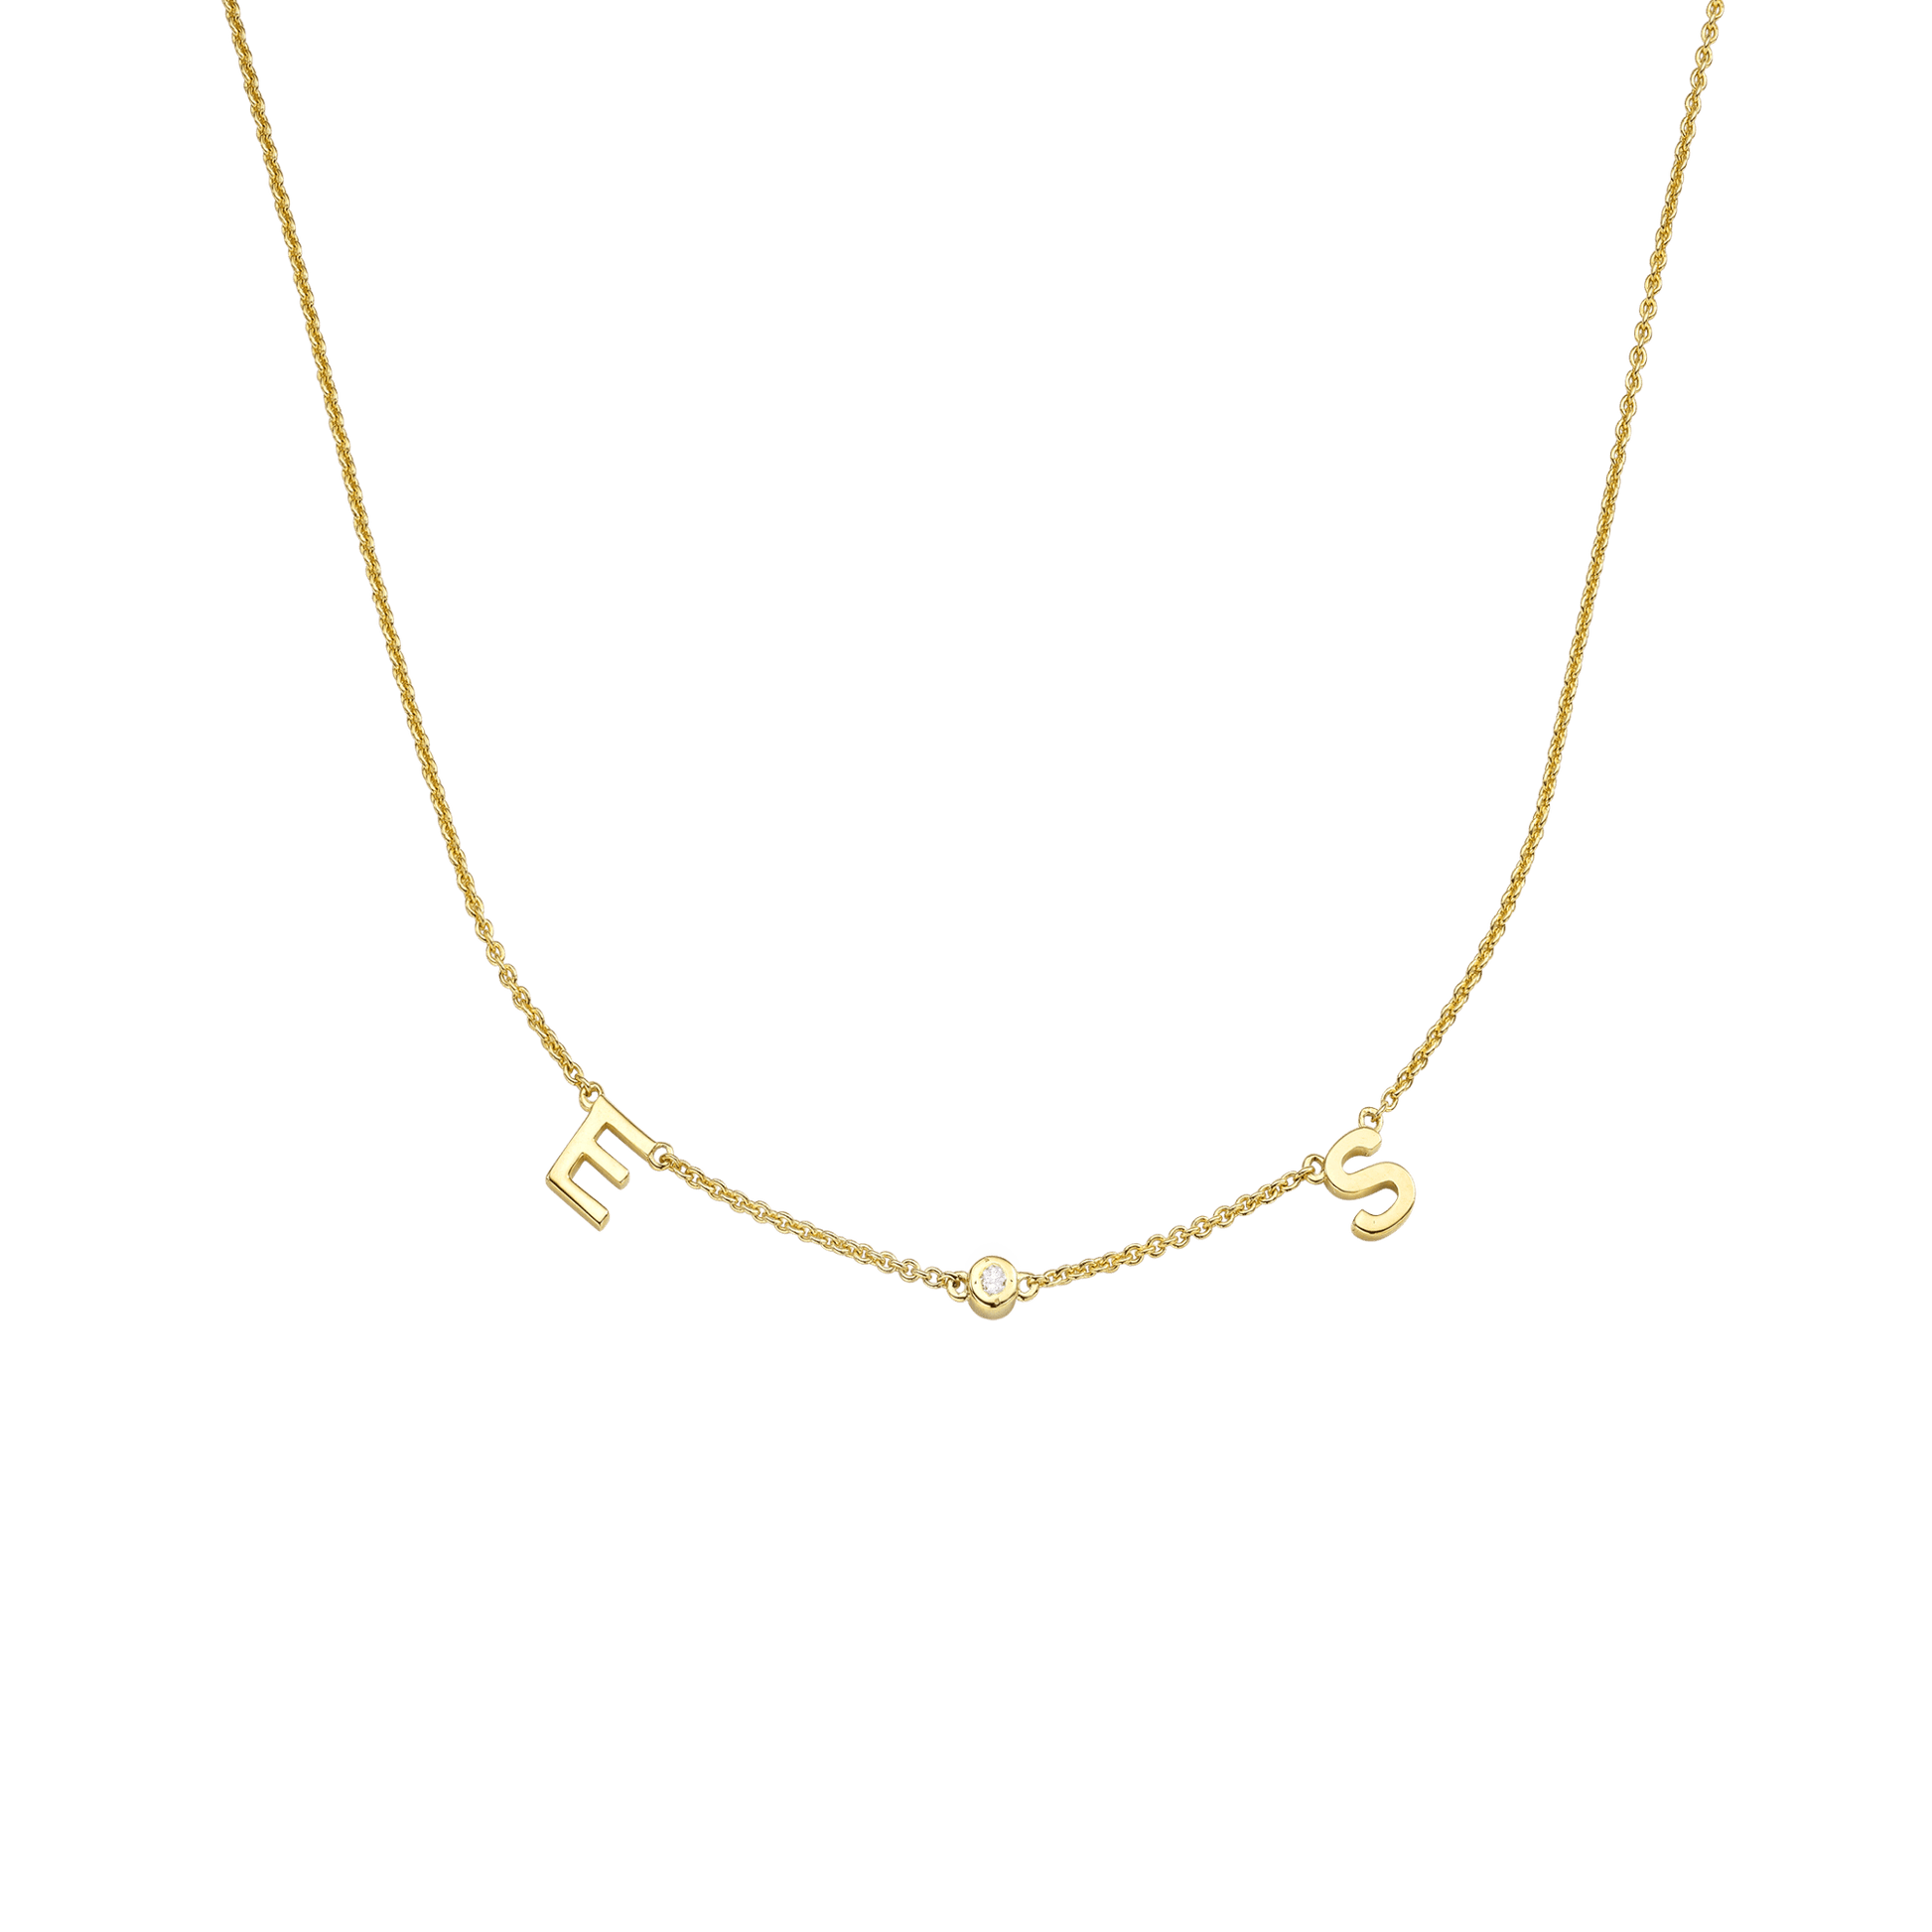 Initial Necklace with Diamonds - 18K Gold Vermeil Necklaces magal-dev 1 Initial + 1 Diamond Adjustable 16-17" (40cm-43cm) 